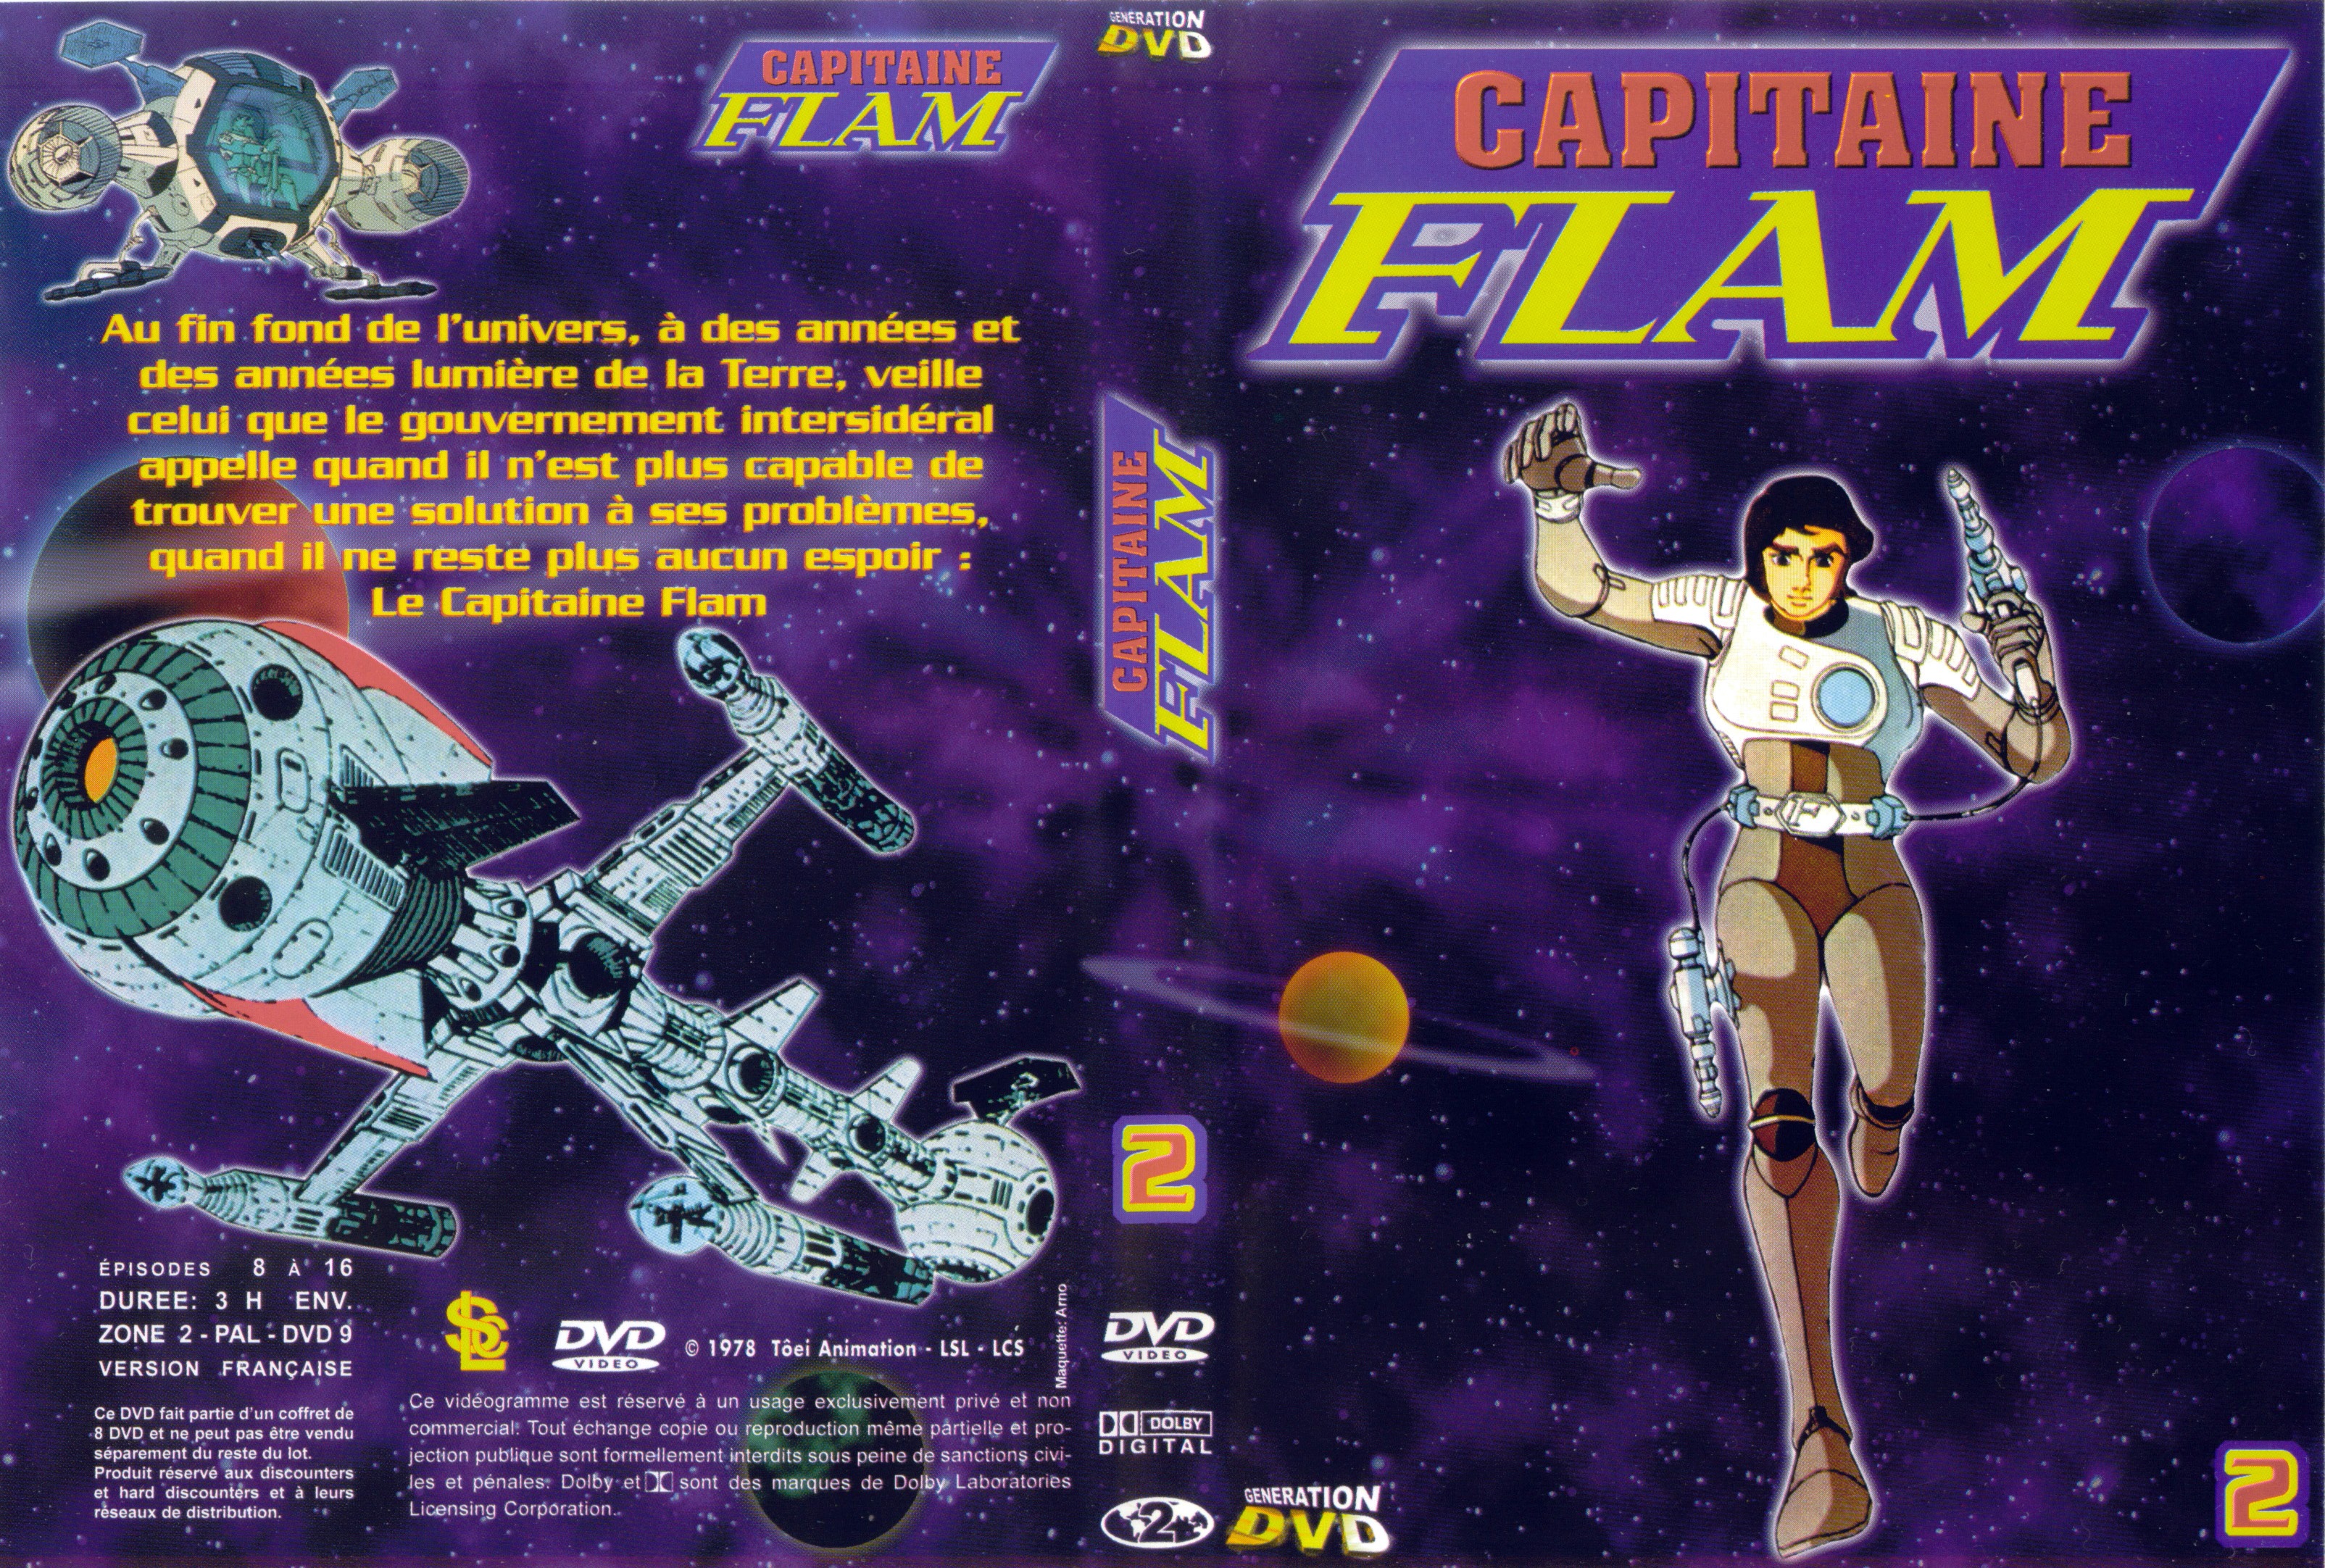 Jaquette DVD Capitaine Flam vol 2 (GENERATION DVD)